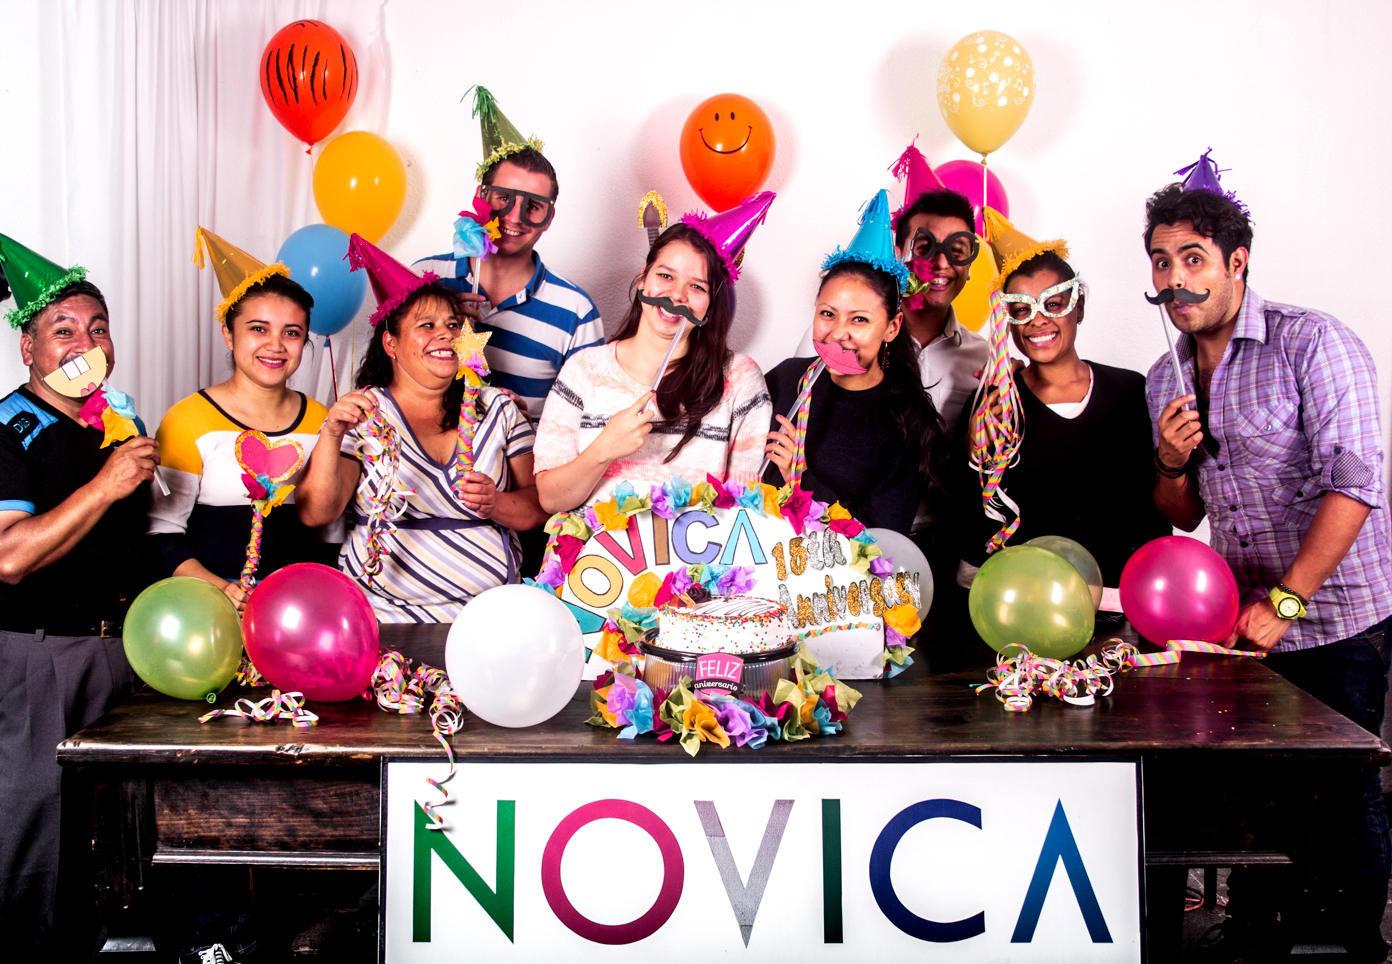 NOVICA Central America Team